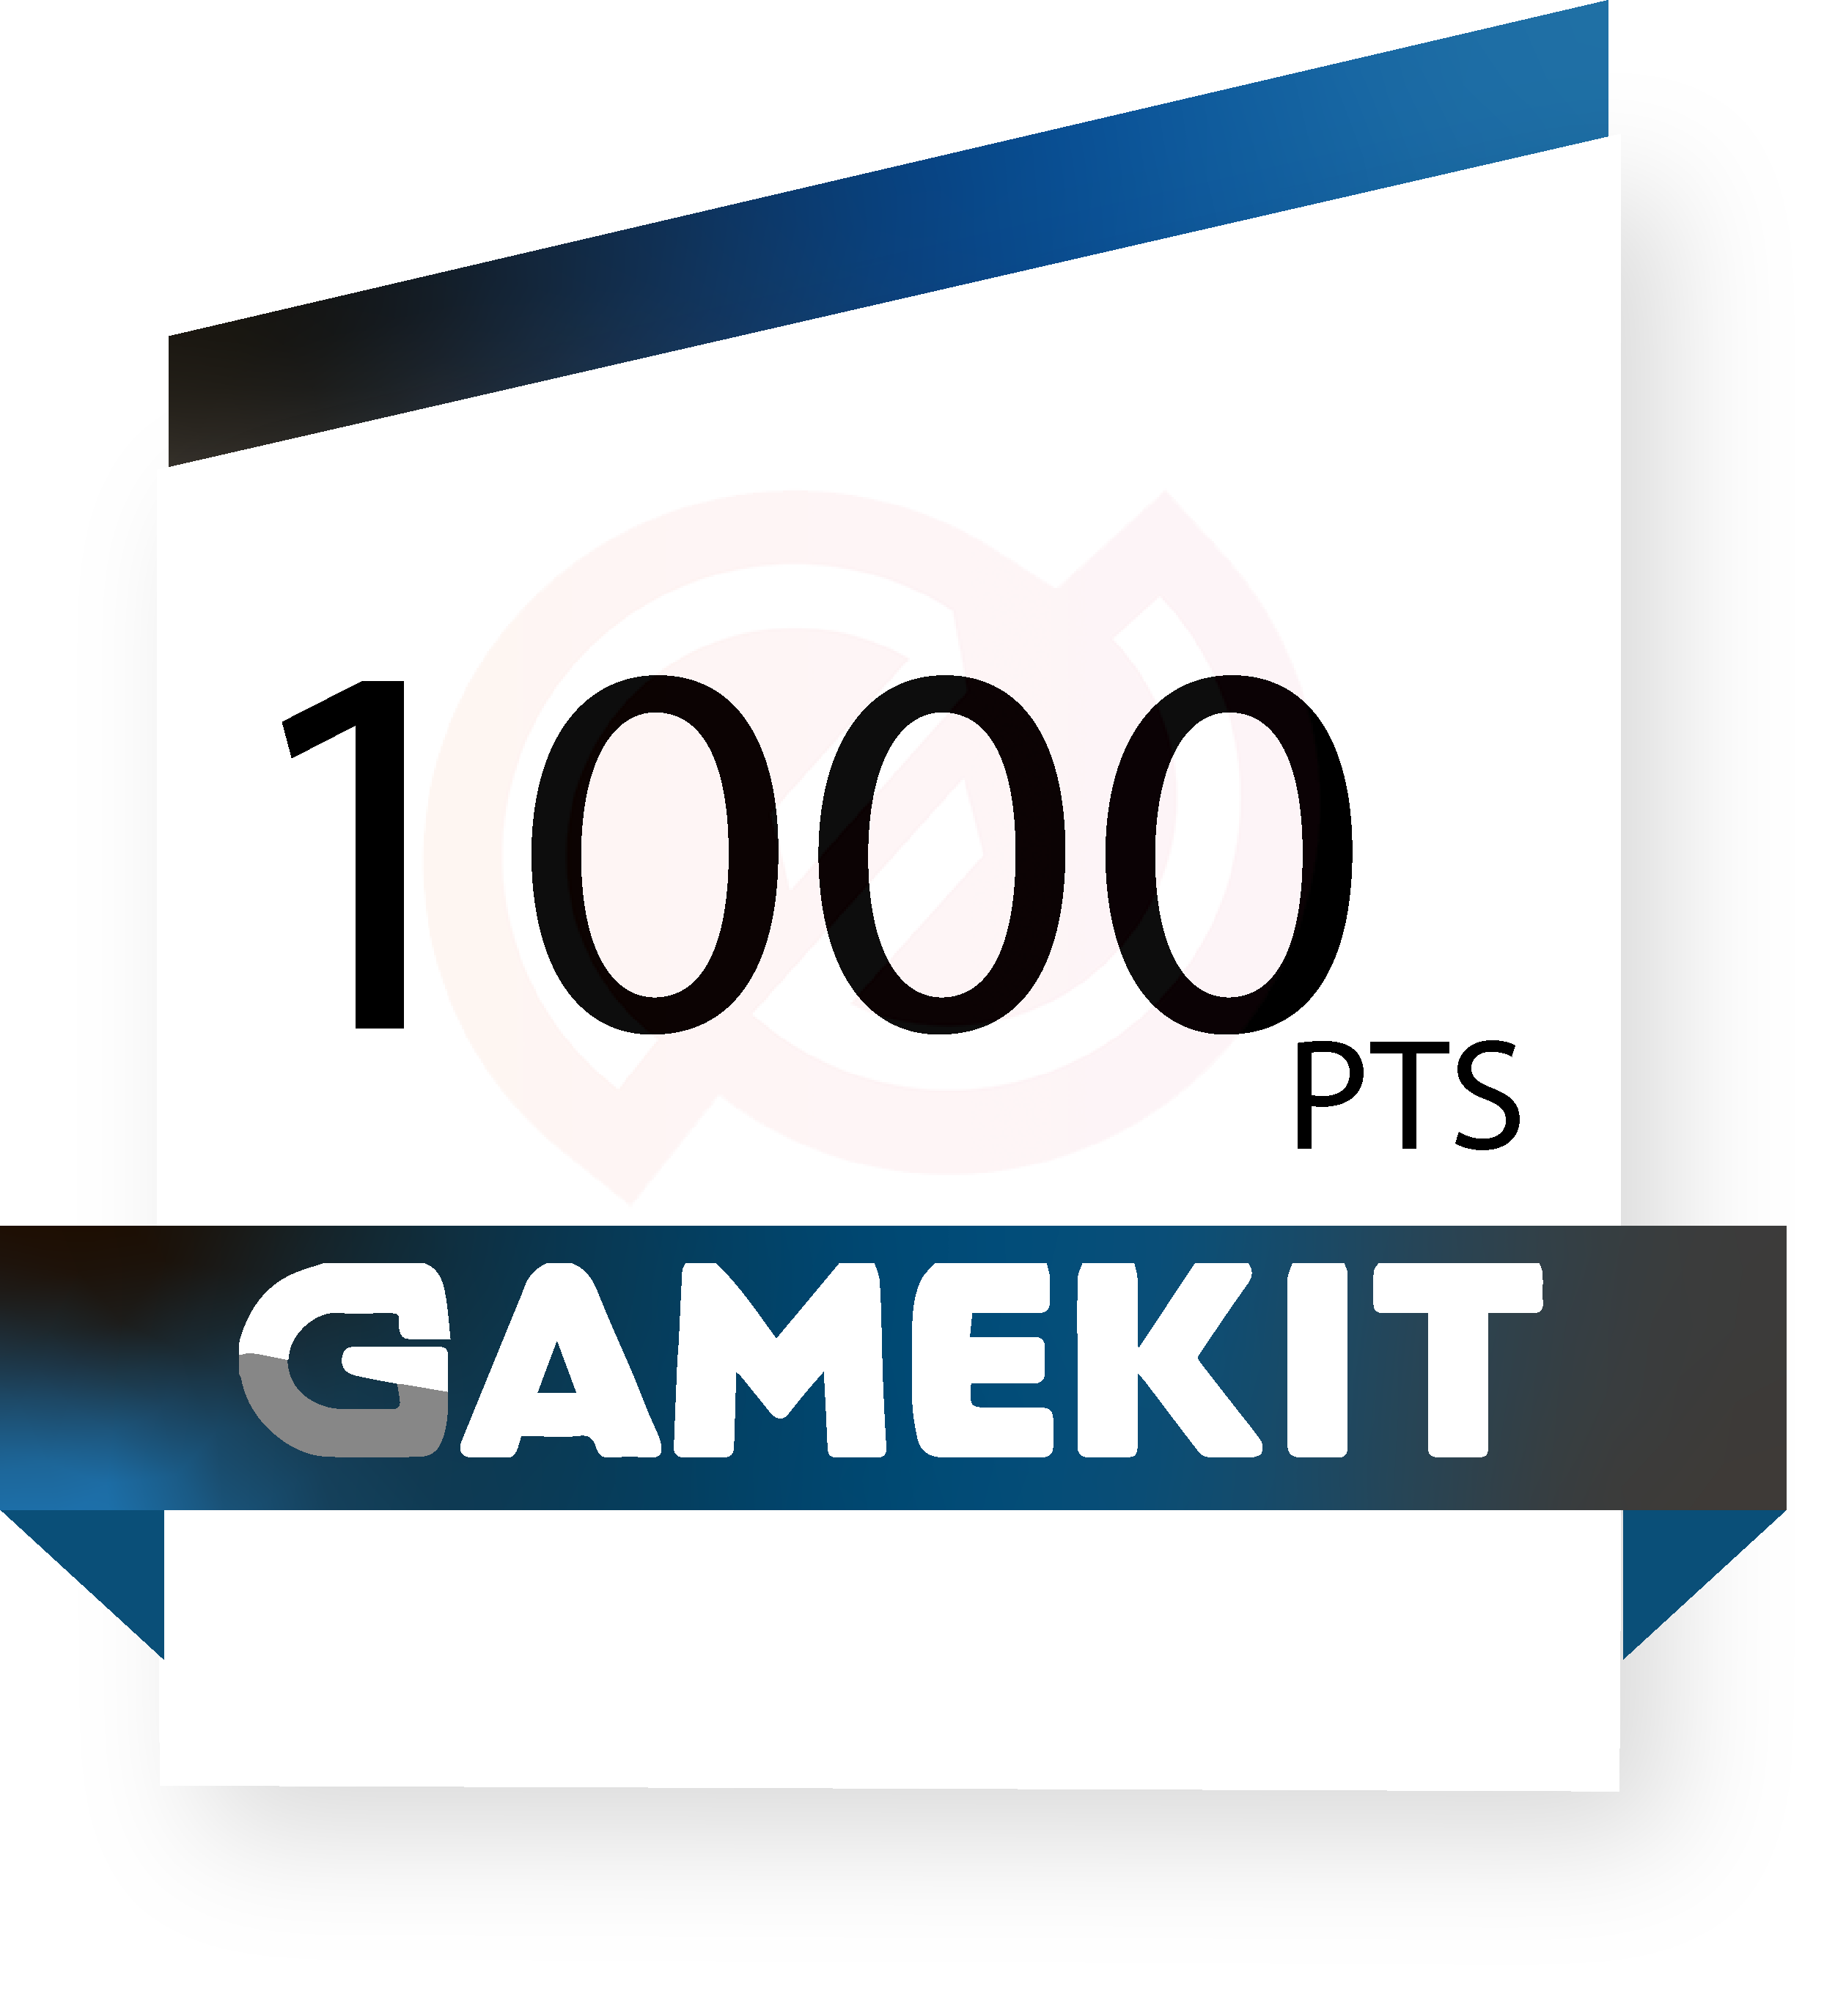 Gamekit : 1000 points